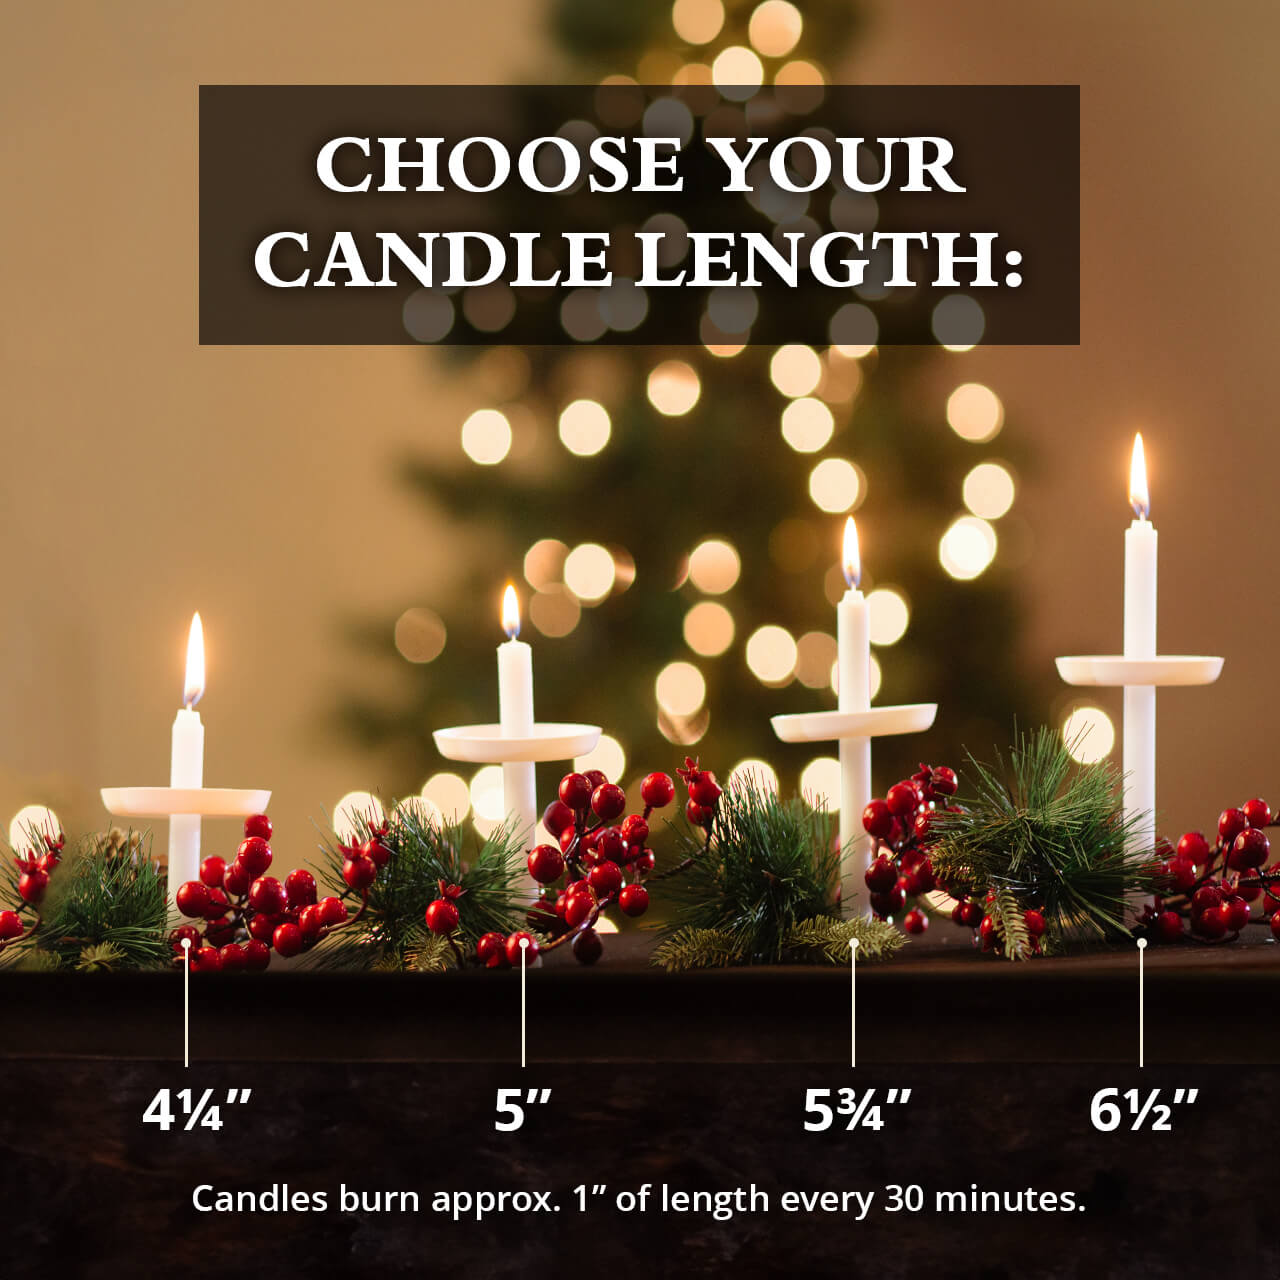 Candlelight Size Comparison